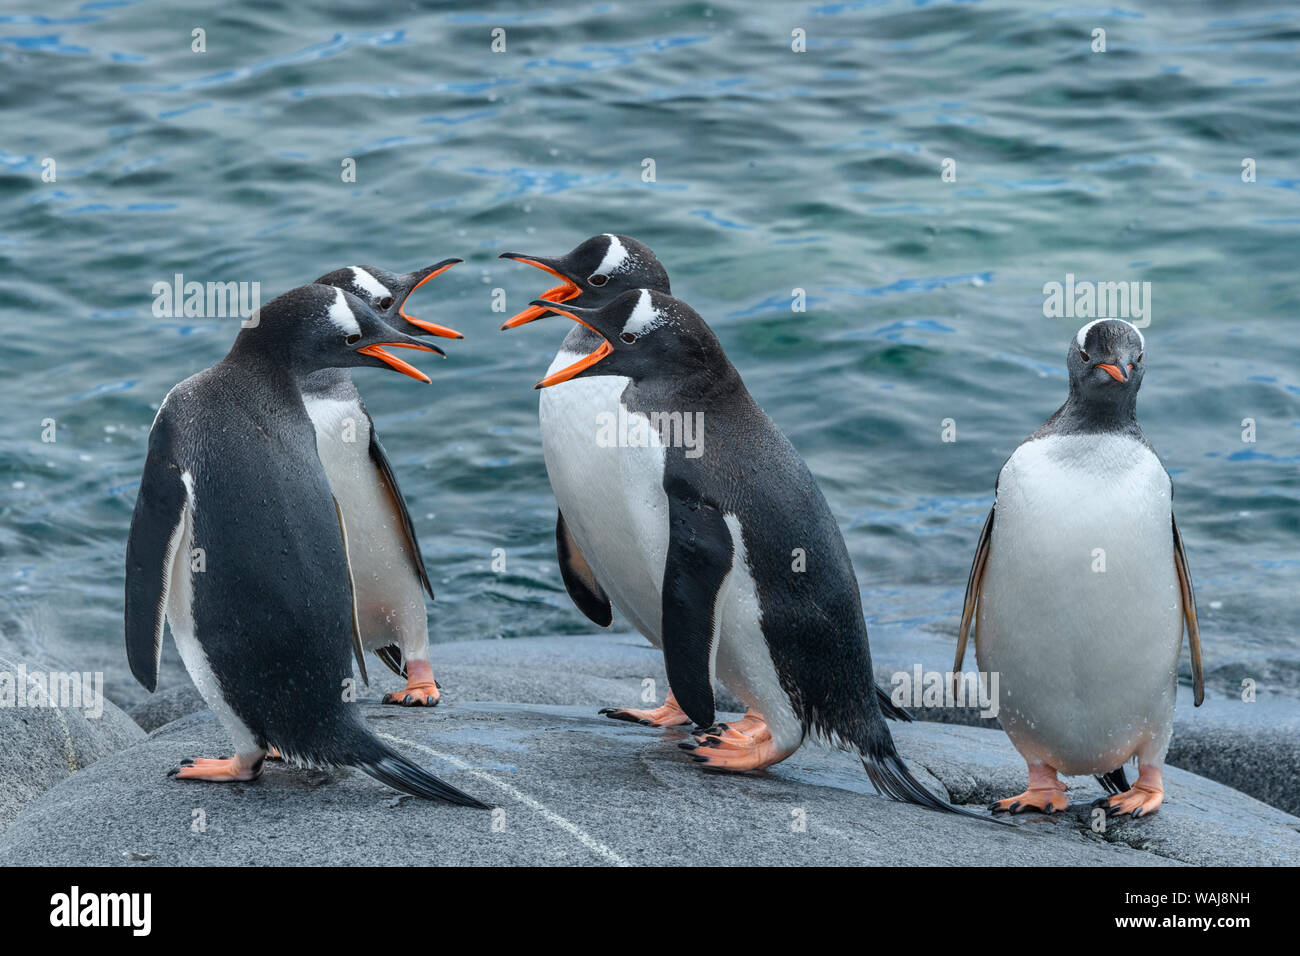 Antarctica, Antarctic Peninsula, Booth Island. Gentoo penguins socializing. Stock Photo